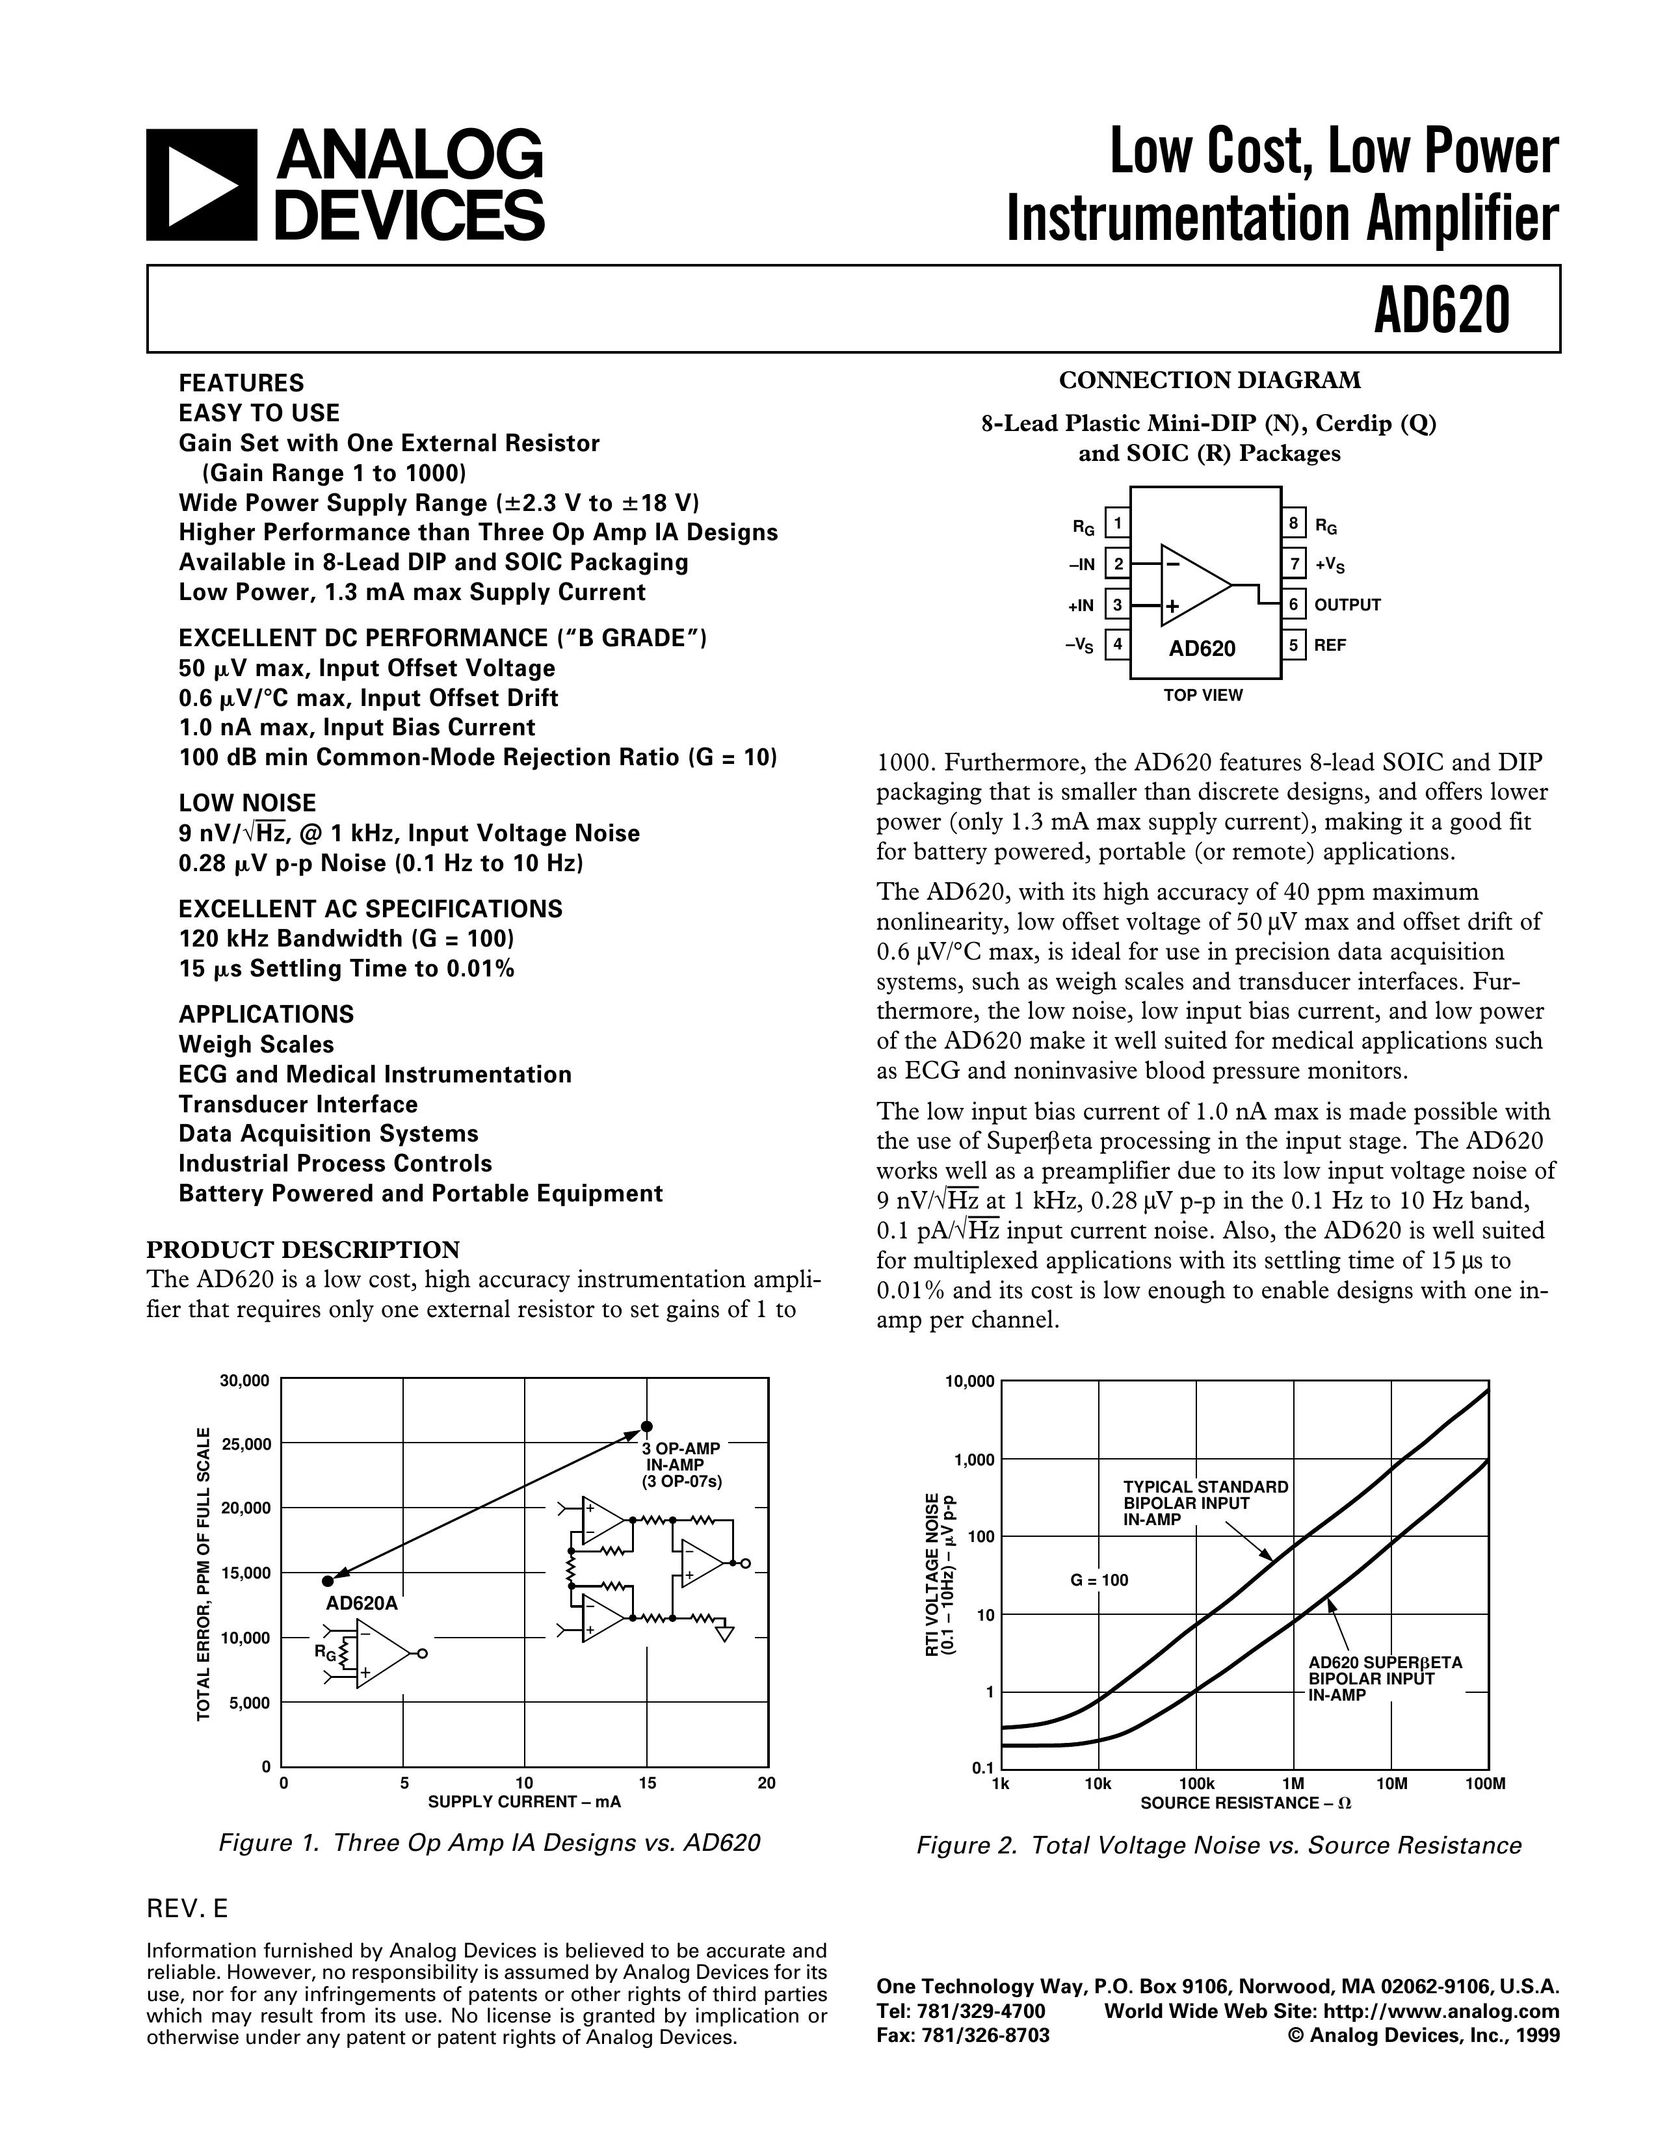 Analog Devices C1599c07 Computer Hardware User Manual